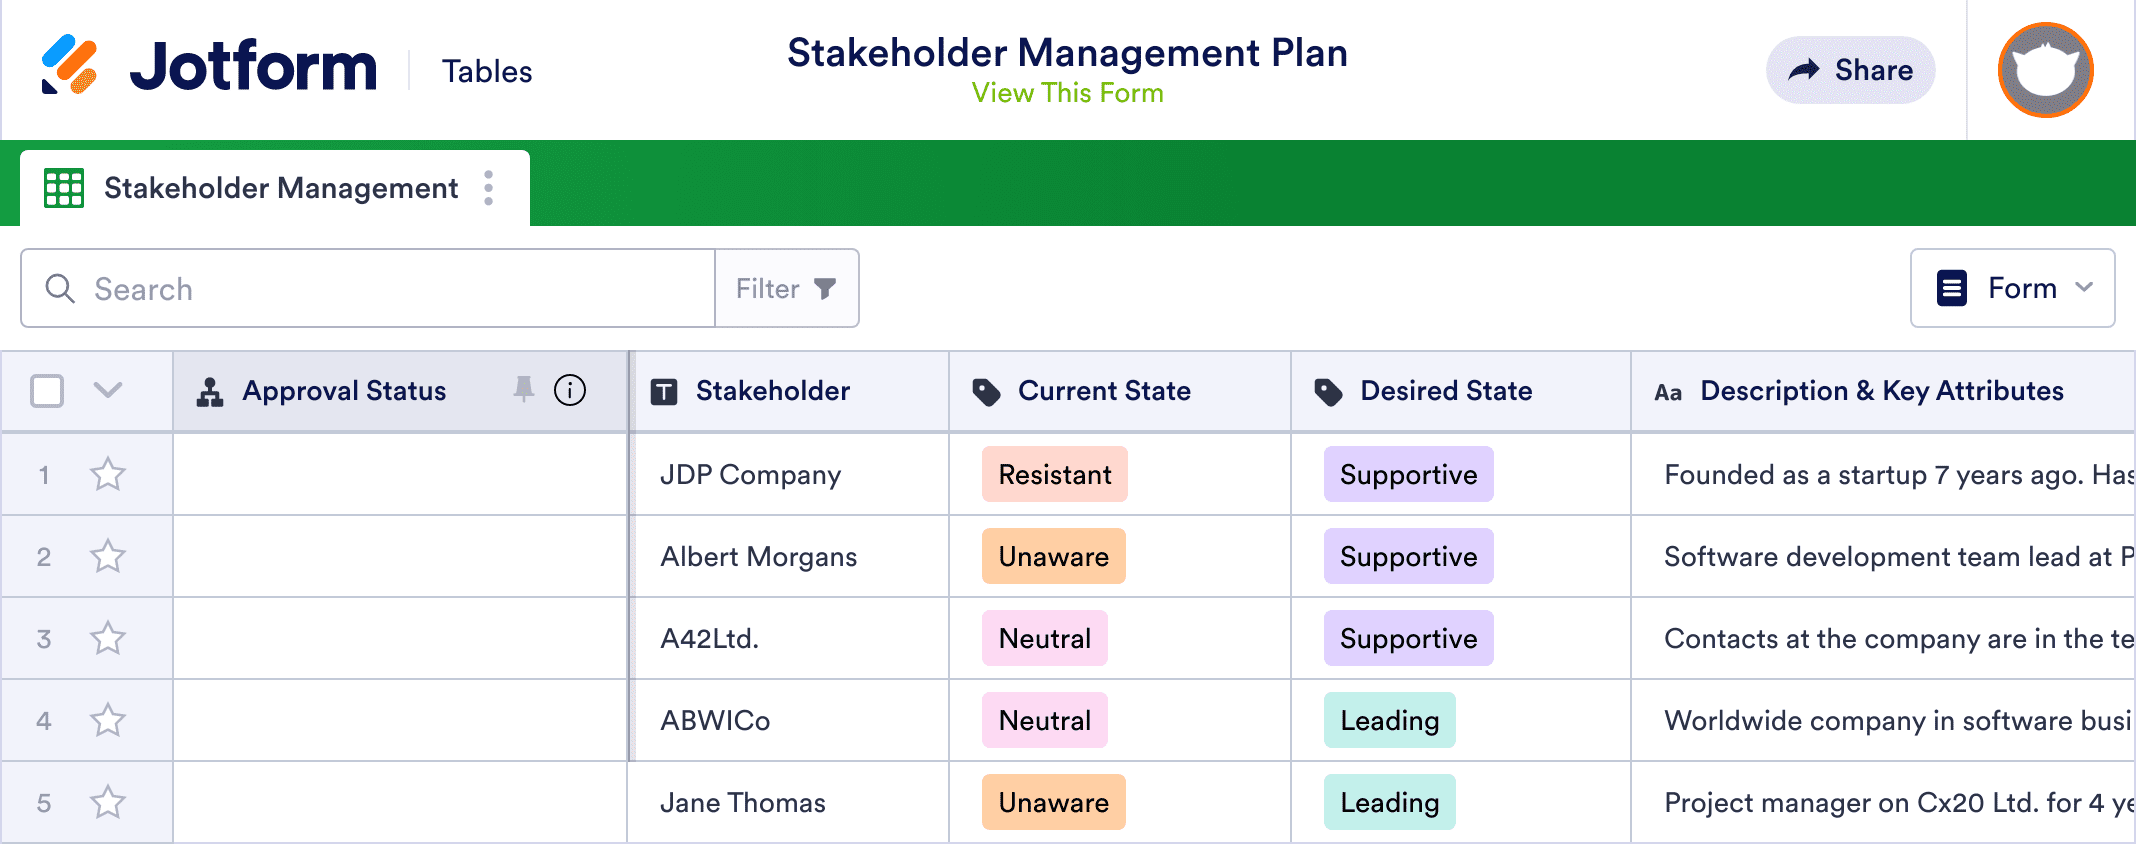 Stakeholder Management Plan Template | Jotform Tables